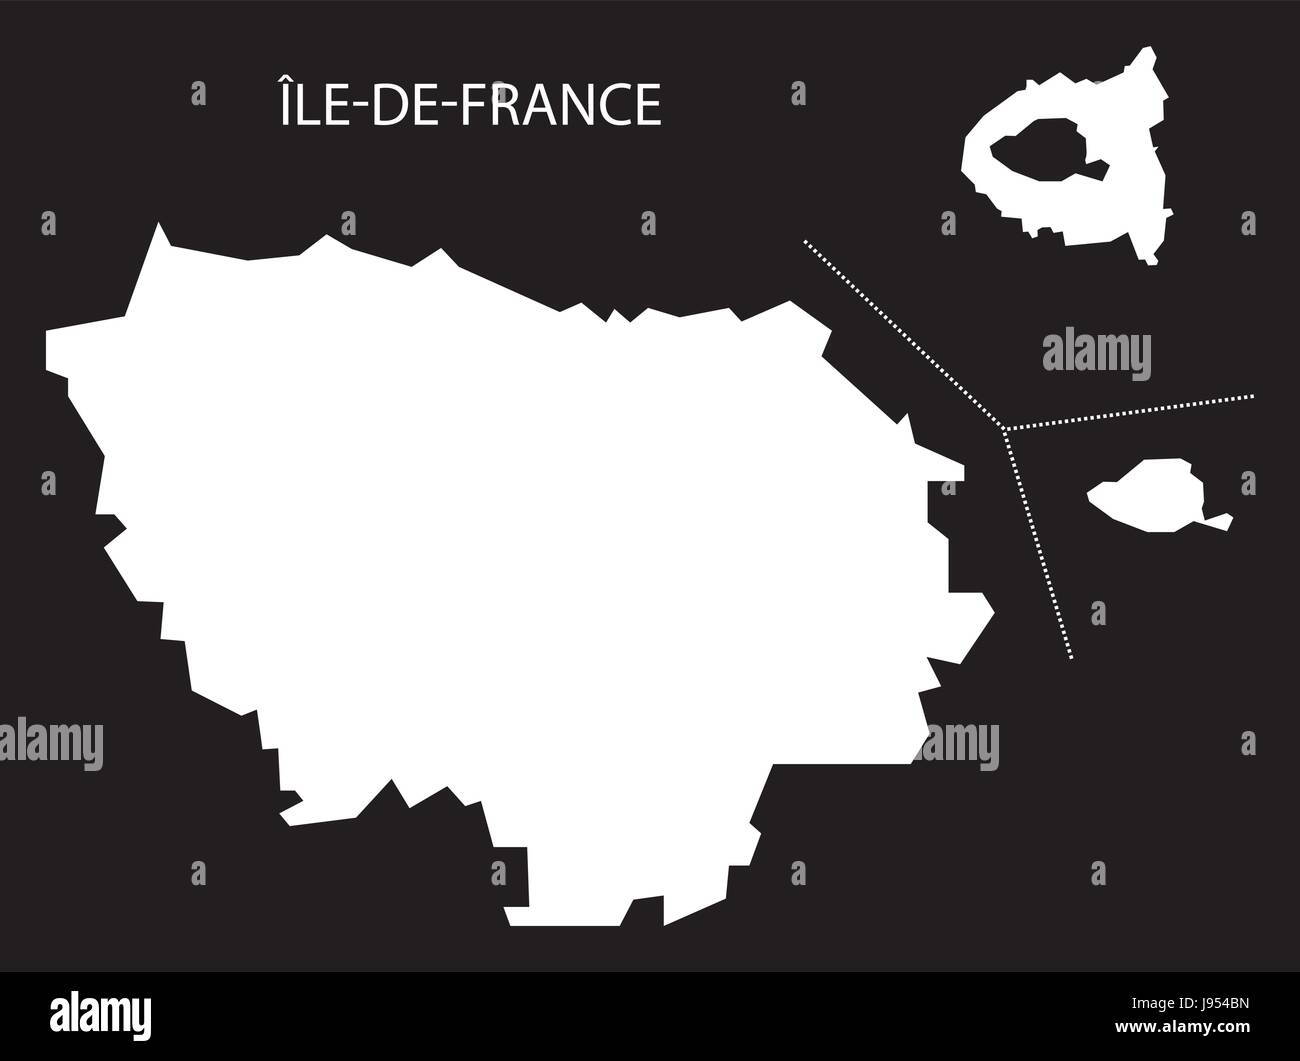 Ile-de-France France map black inverted silhouette illustration Stock Vector